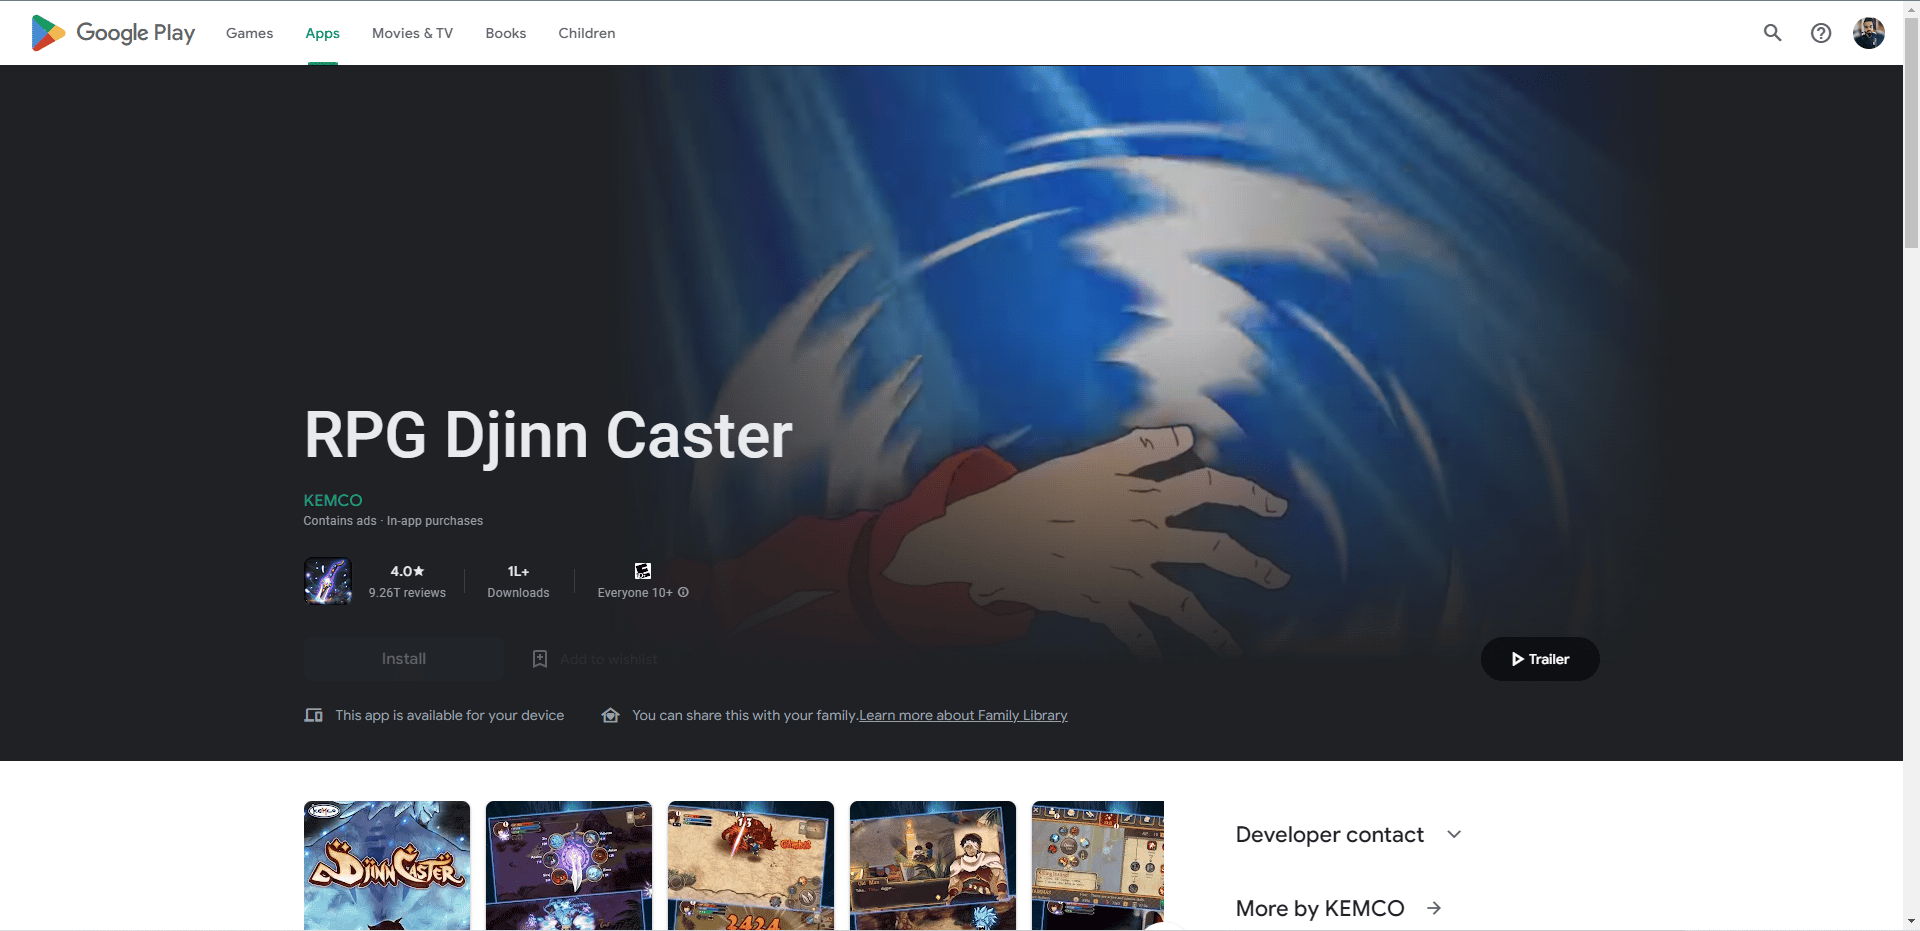 RPG Djinn Caster play store webpage 